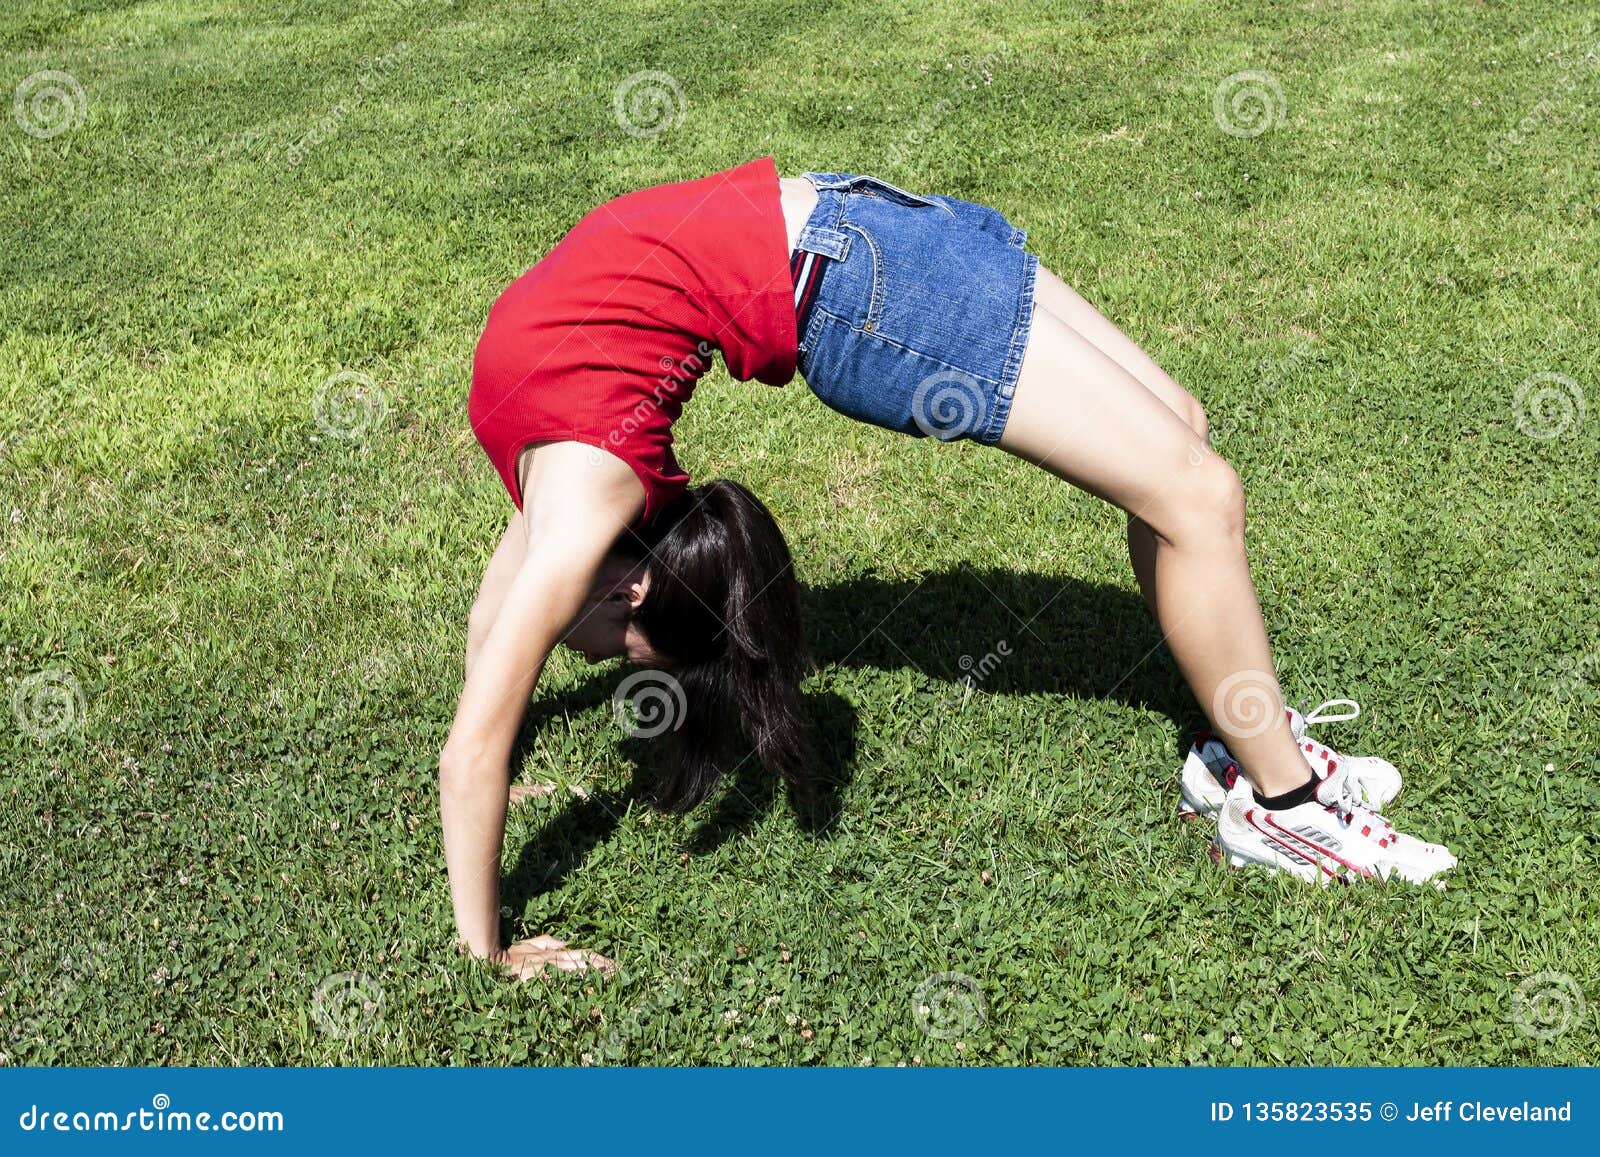 conrado carreon recommends girl bending over backwards pic